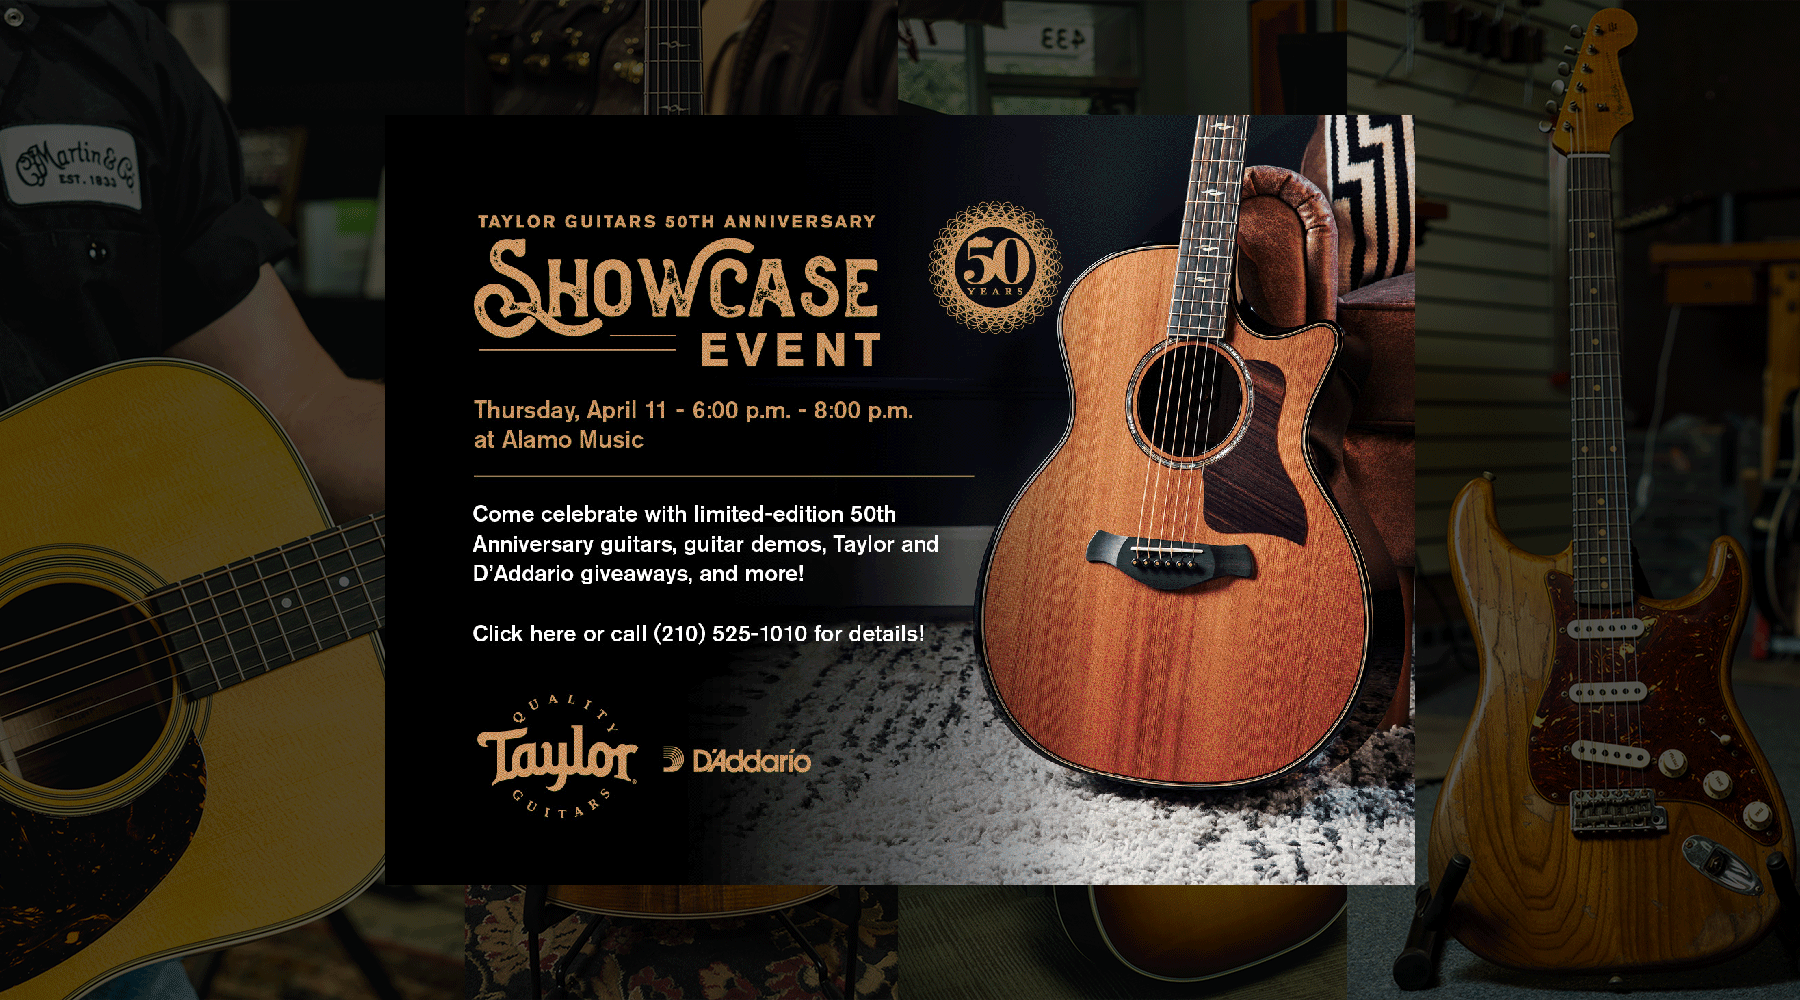 Taylor Guitars 50th Anniversary Showcase Event